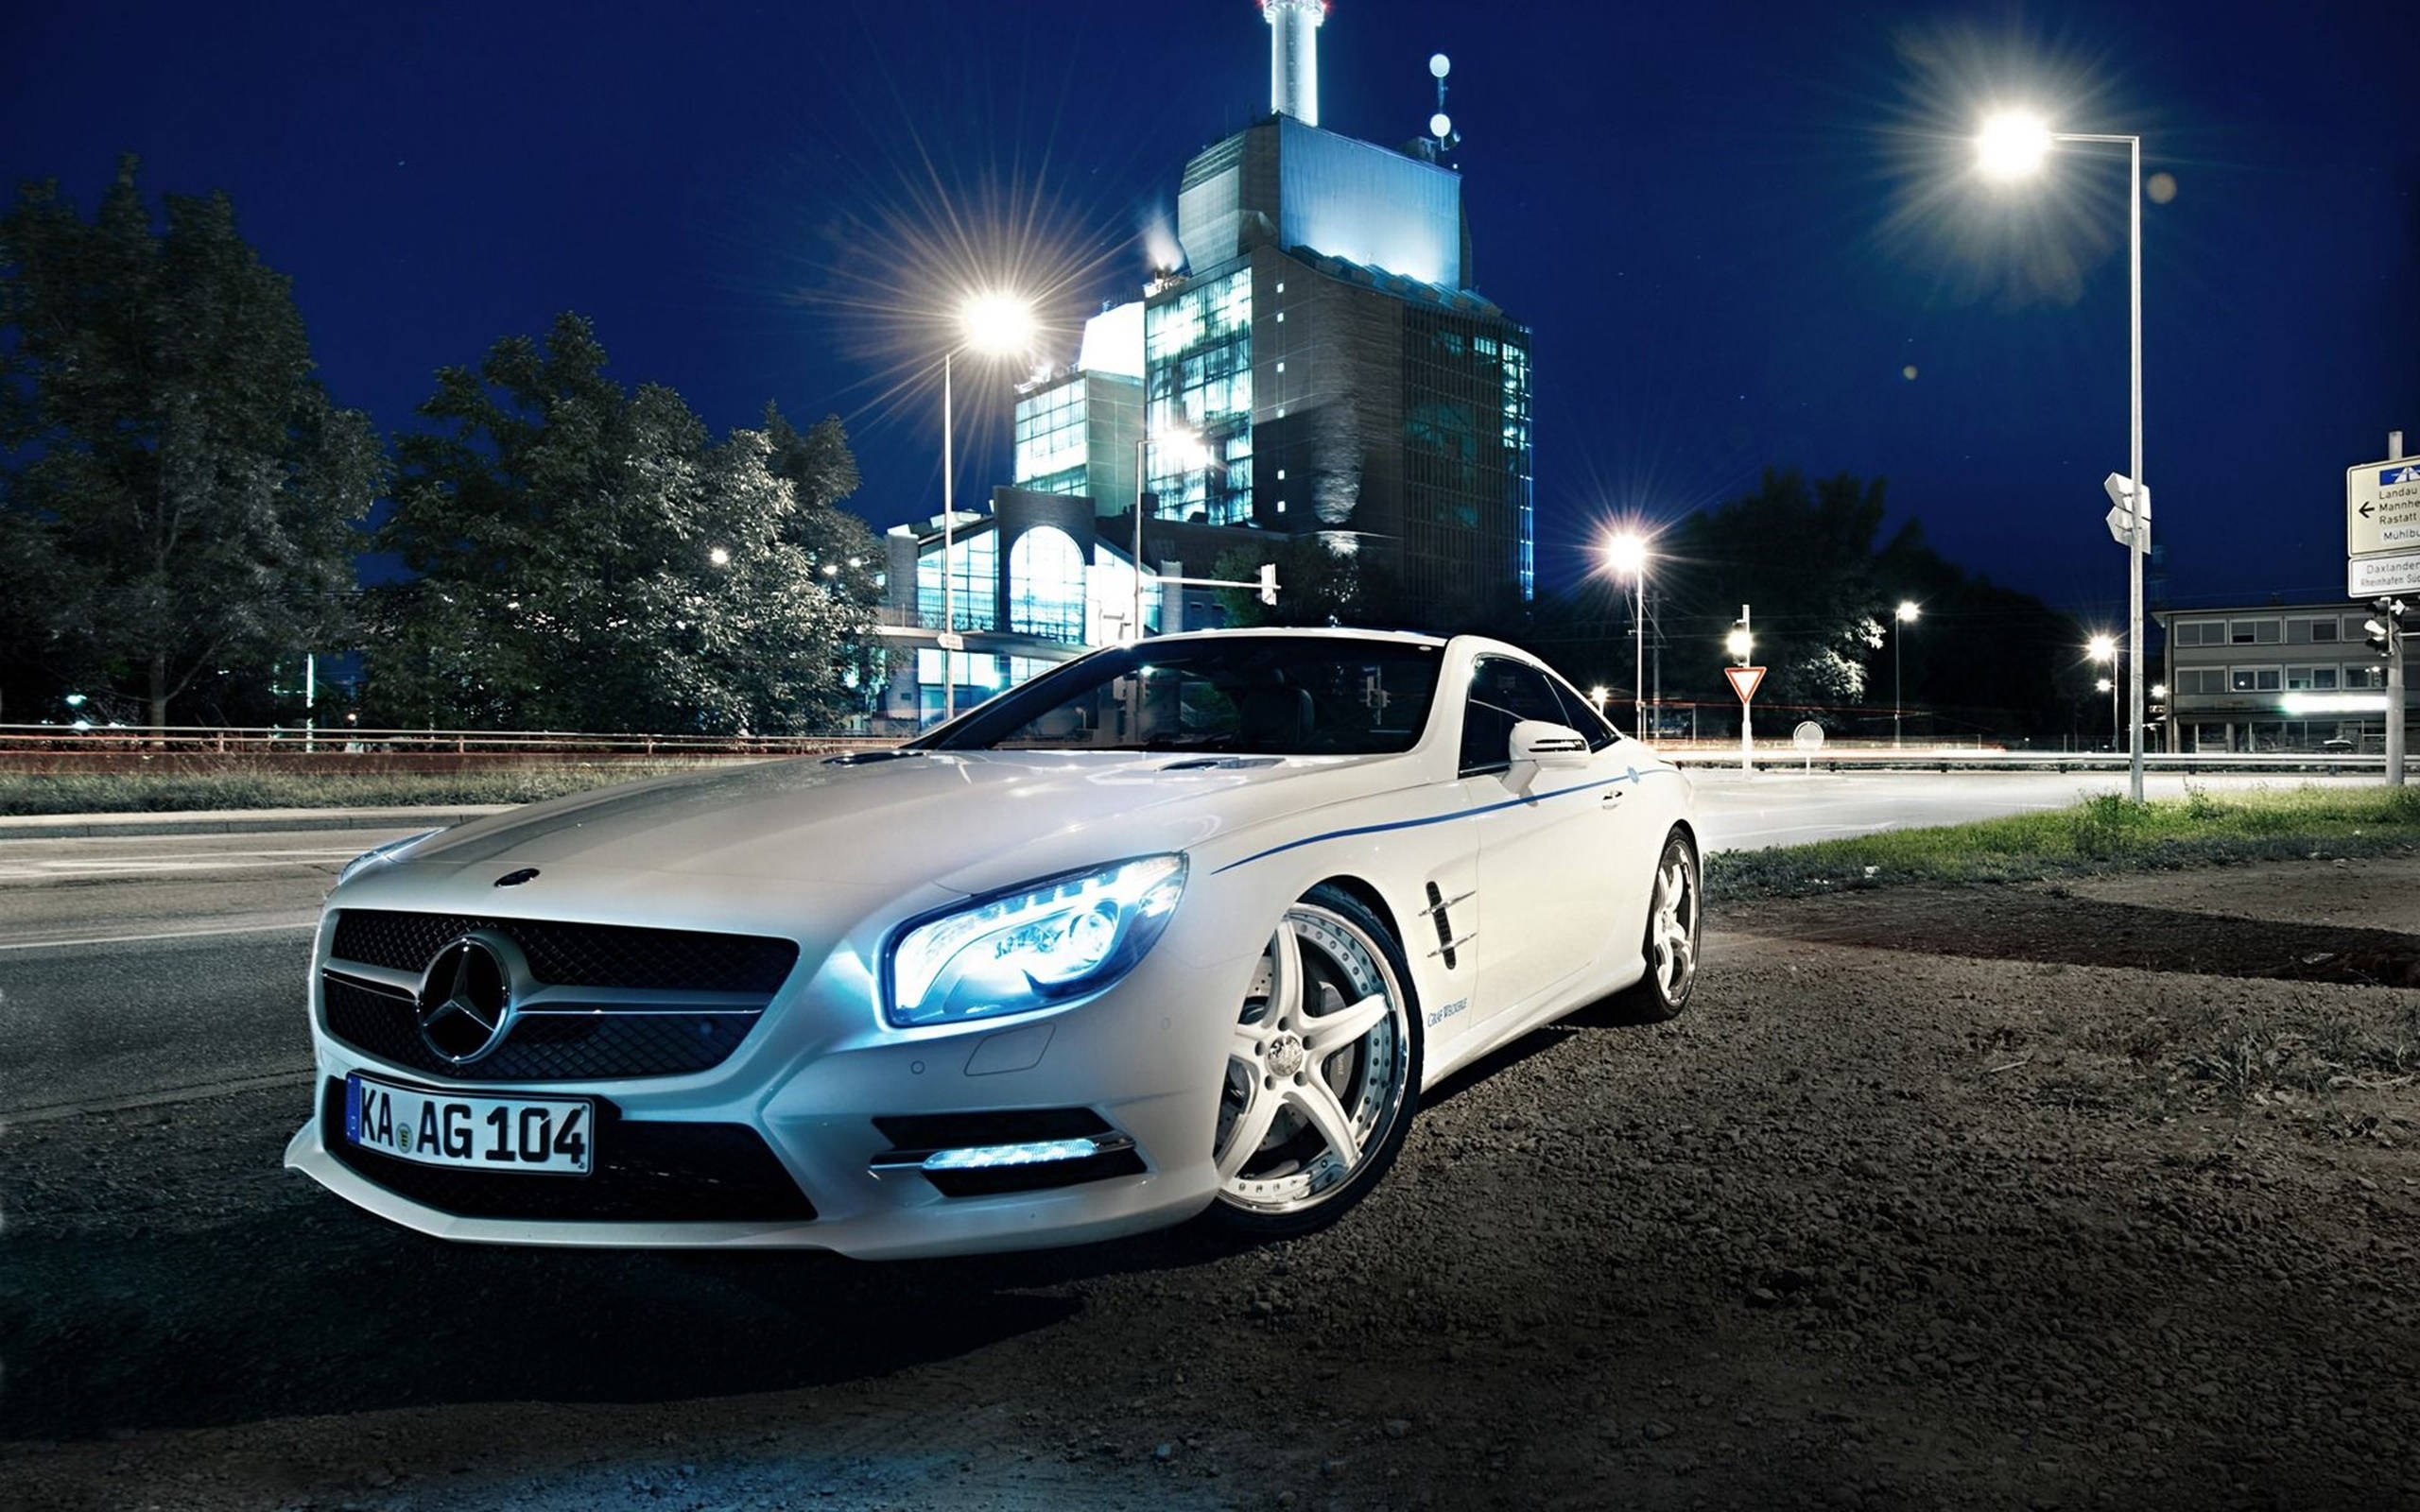 Night Life Luxury: White Mercedes Benz Under City Lights Wallpaper